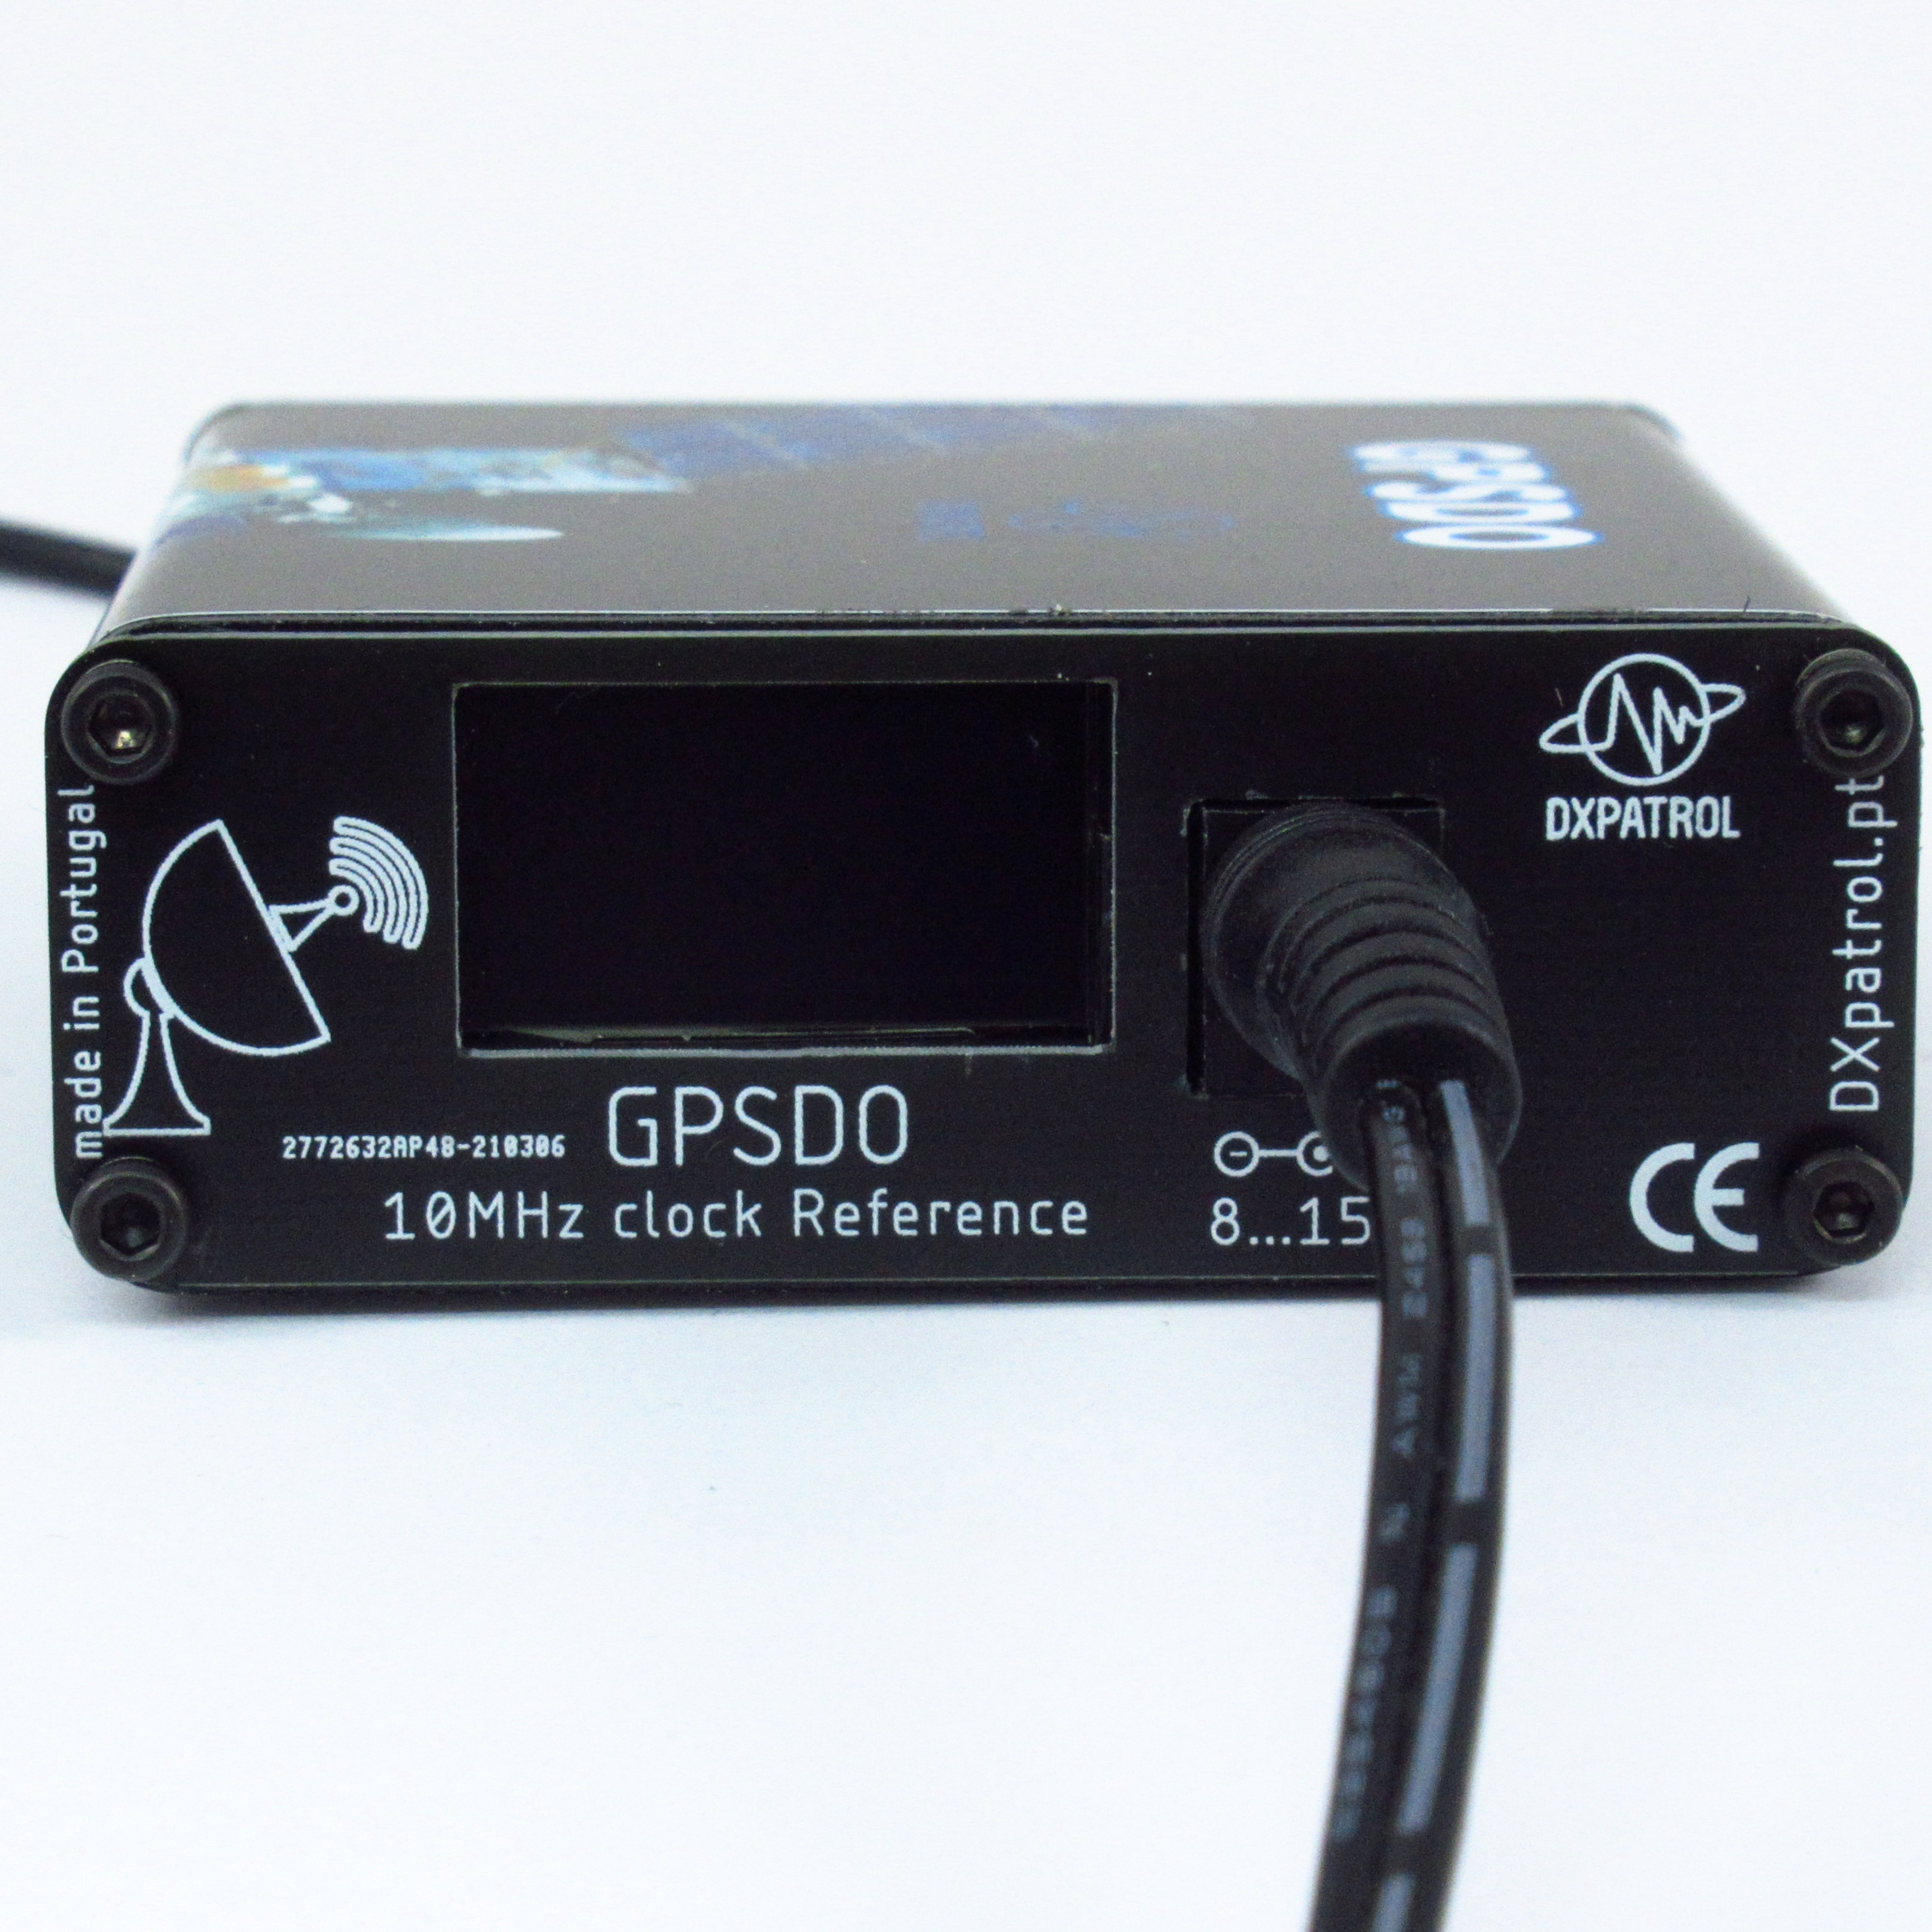 DXPatrol GPSDO 2.0 GPS disziplinierter Normaloszillator mit Oled Display